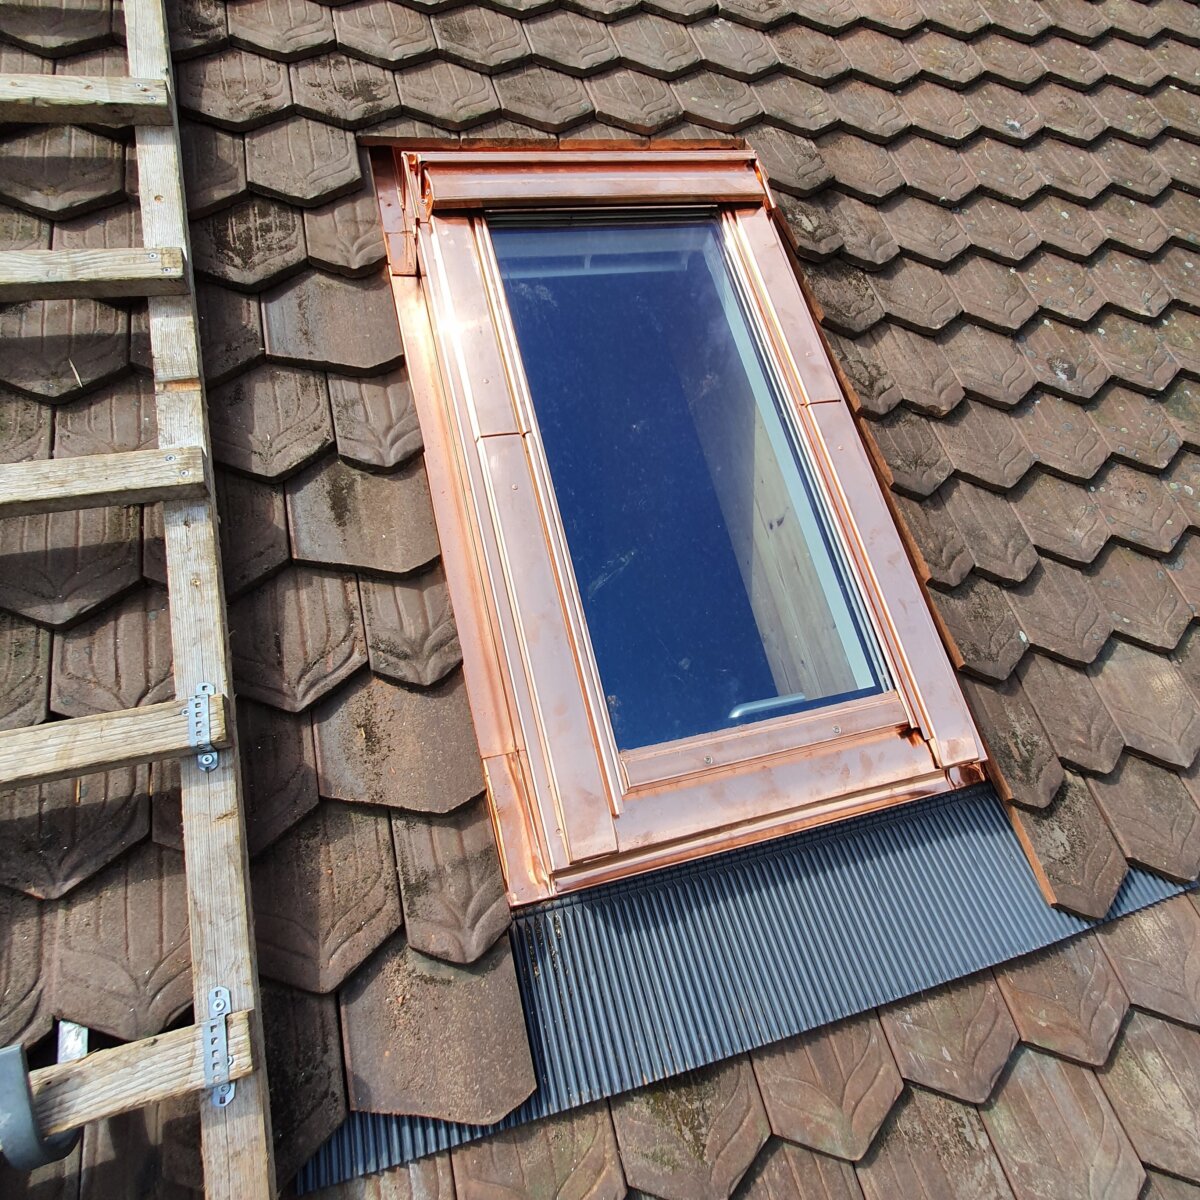 Dachfenster service austausch biberschwanzziegel dach